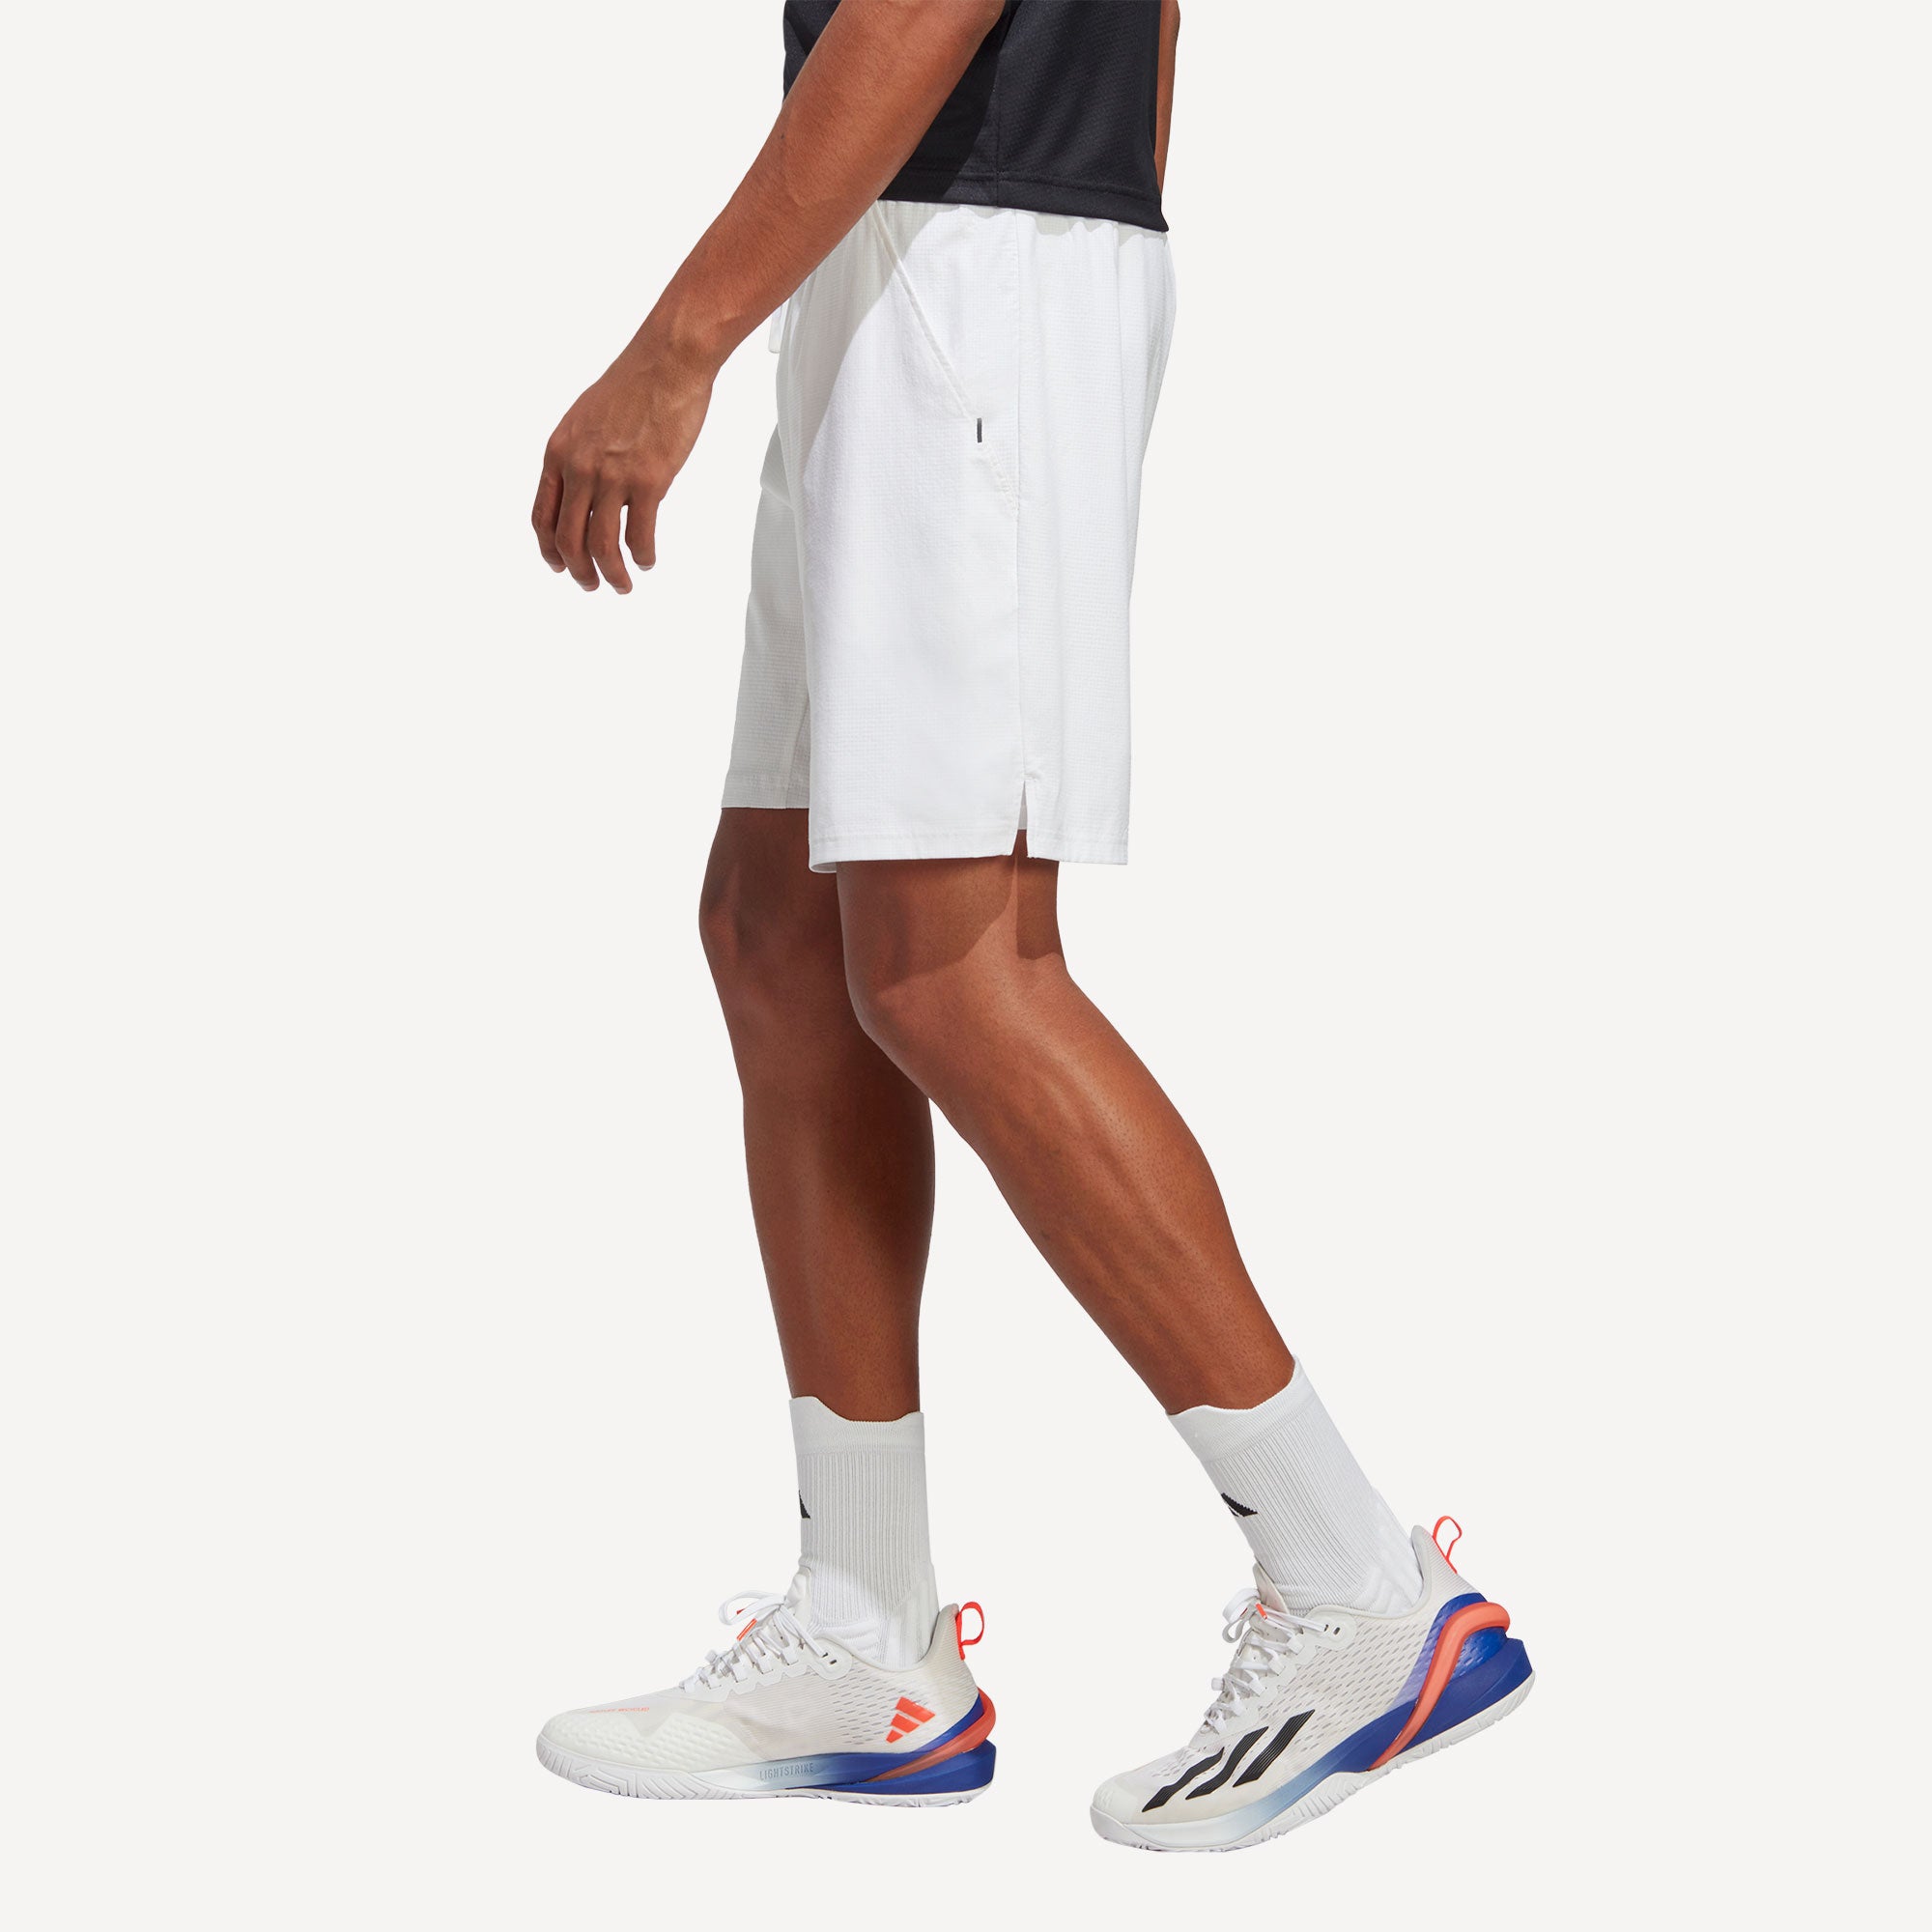 adidas Ergo Men's 9-Inch Tennis Shorts White (3)